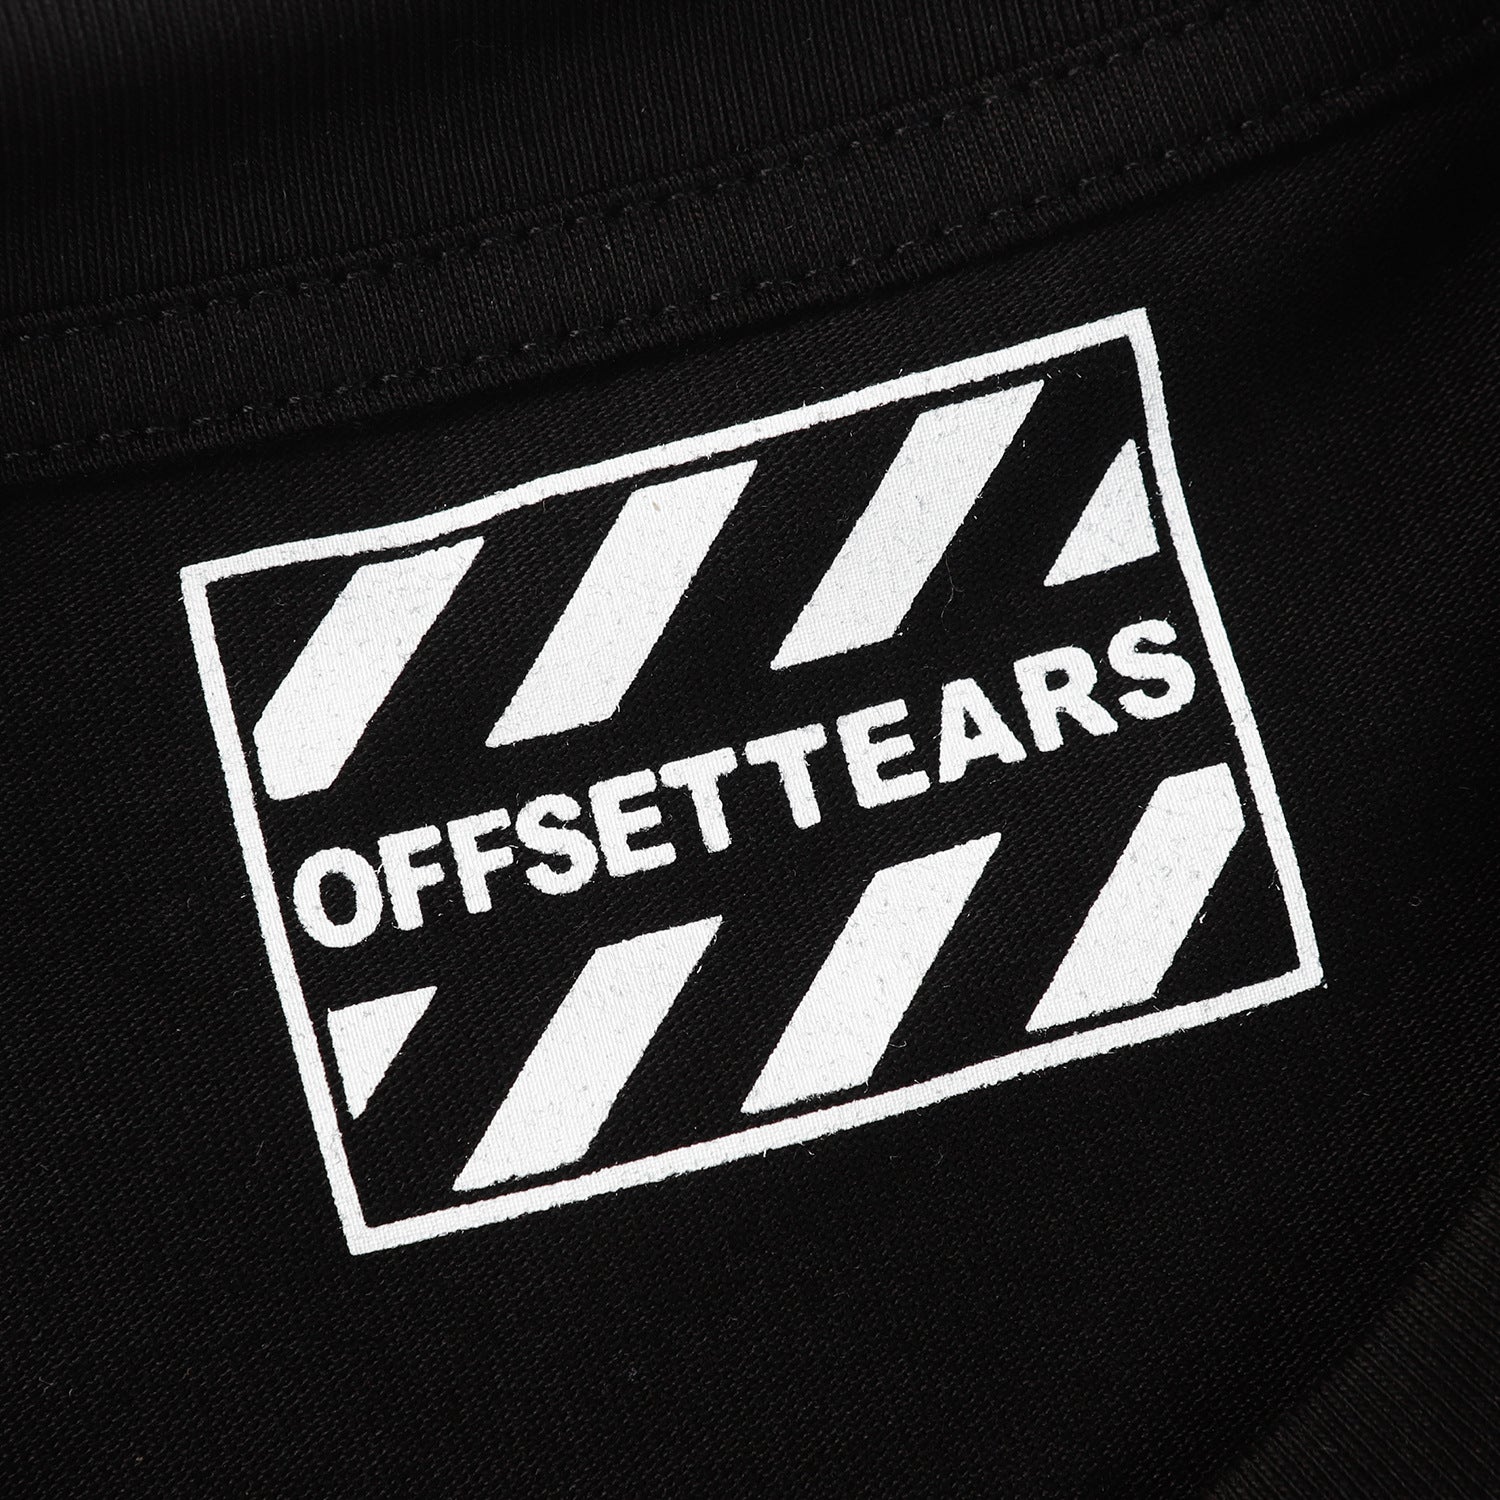 Denim Tears Offset Tears T-Shirts